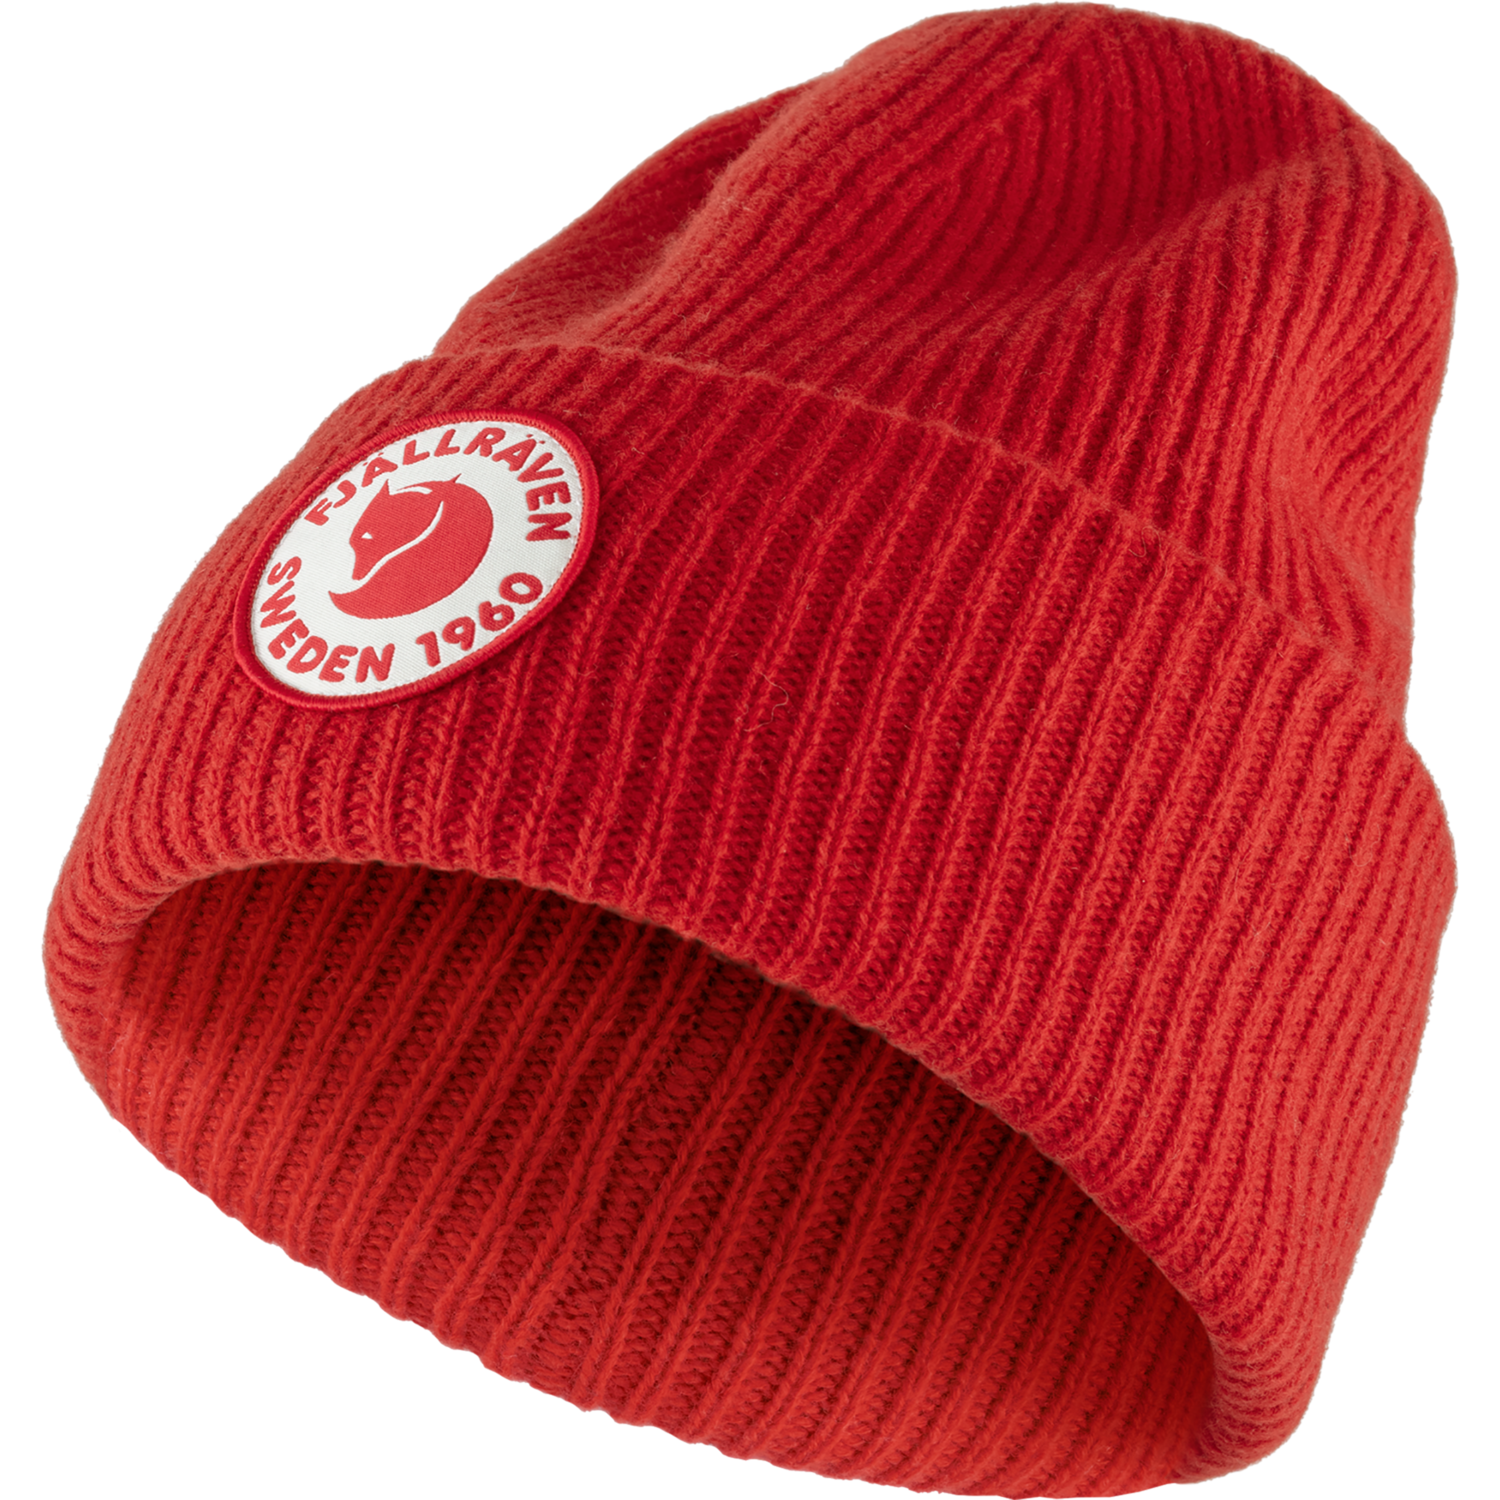 Woolen red branded hat or cap